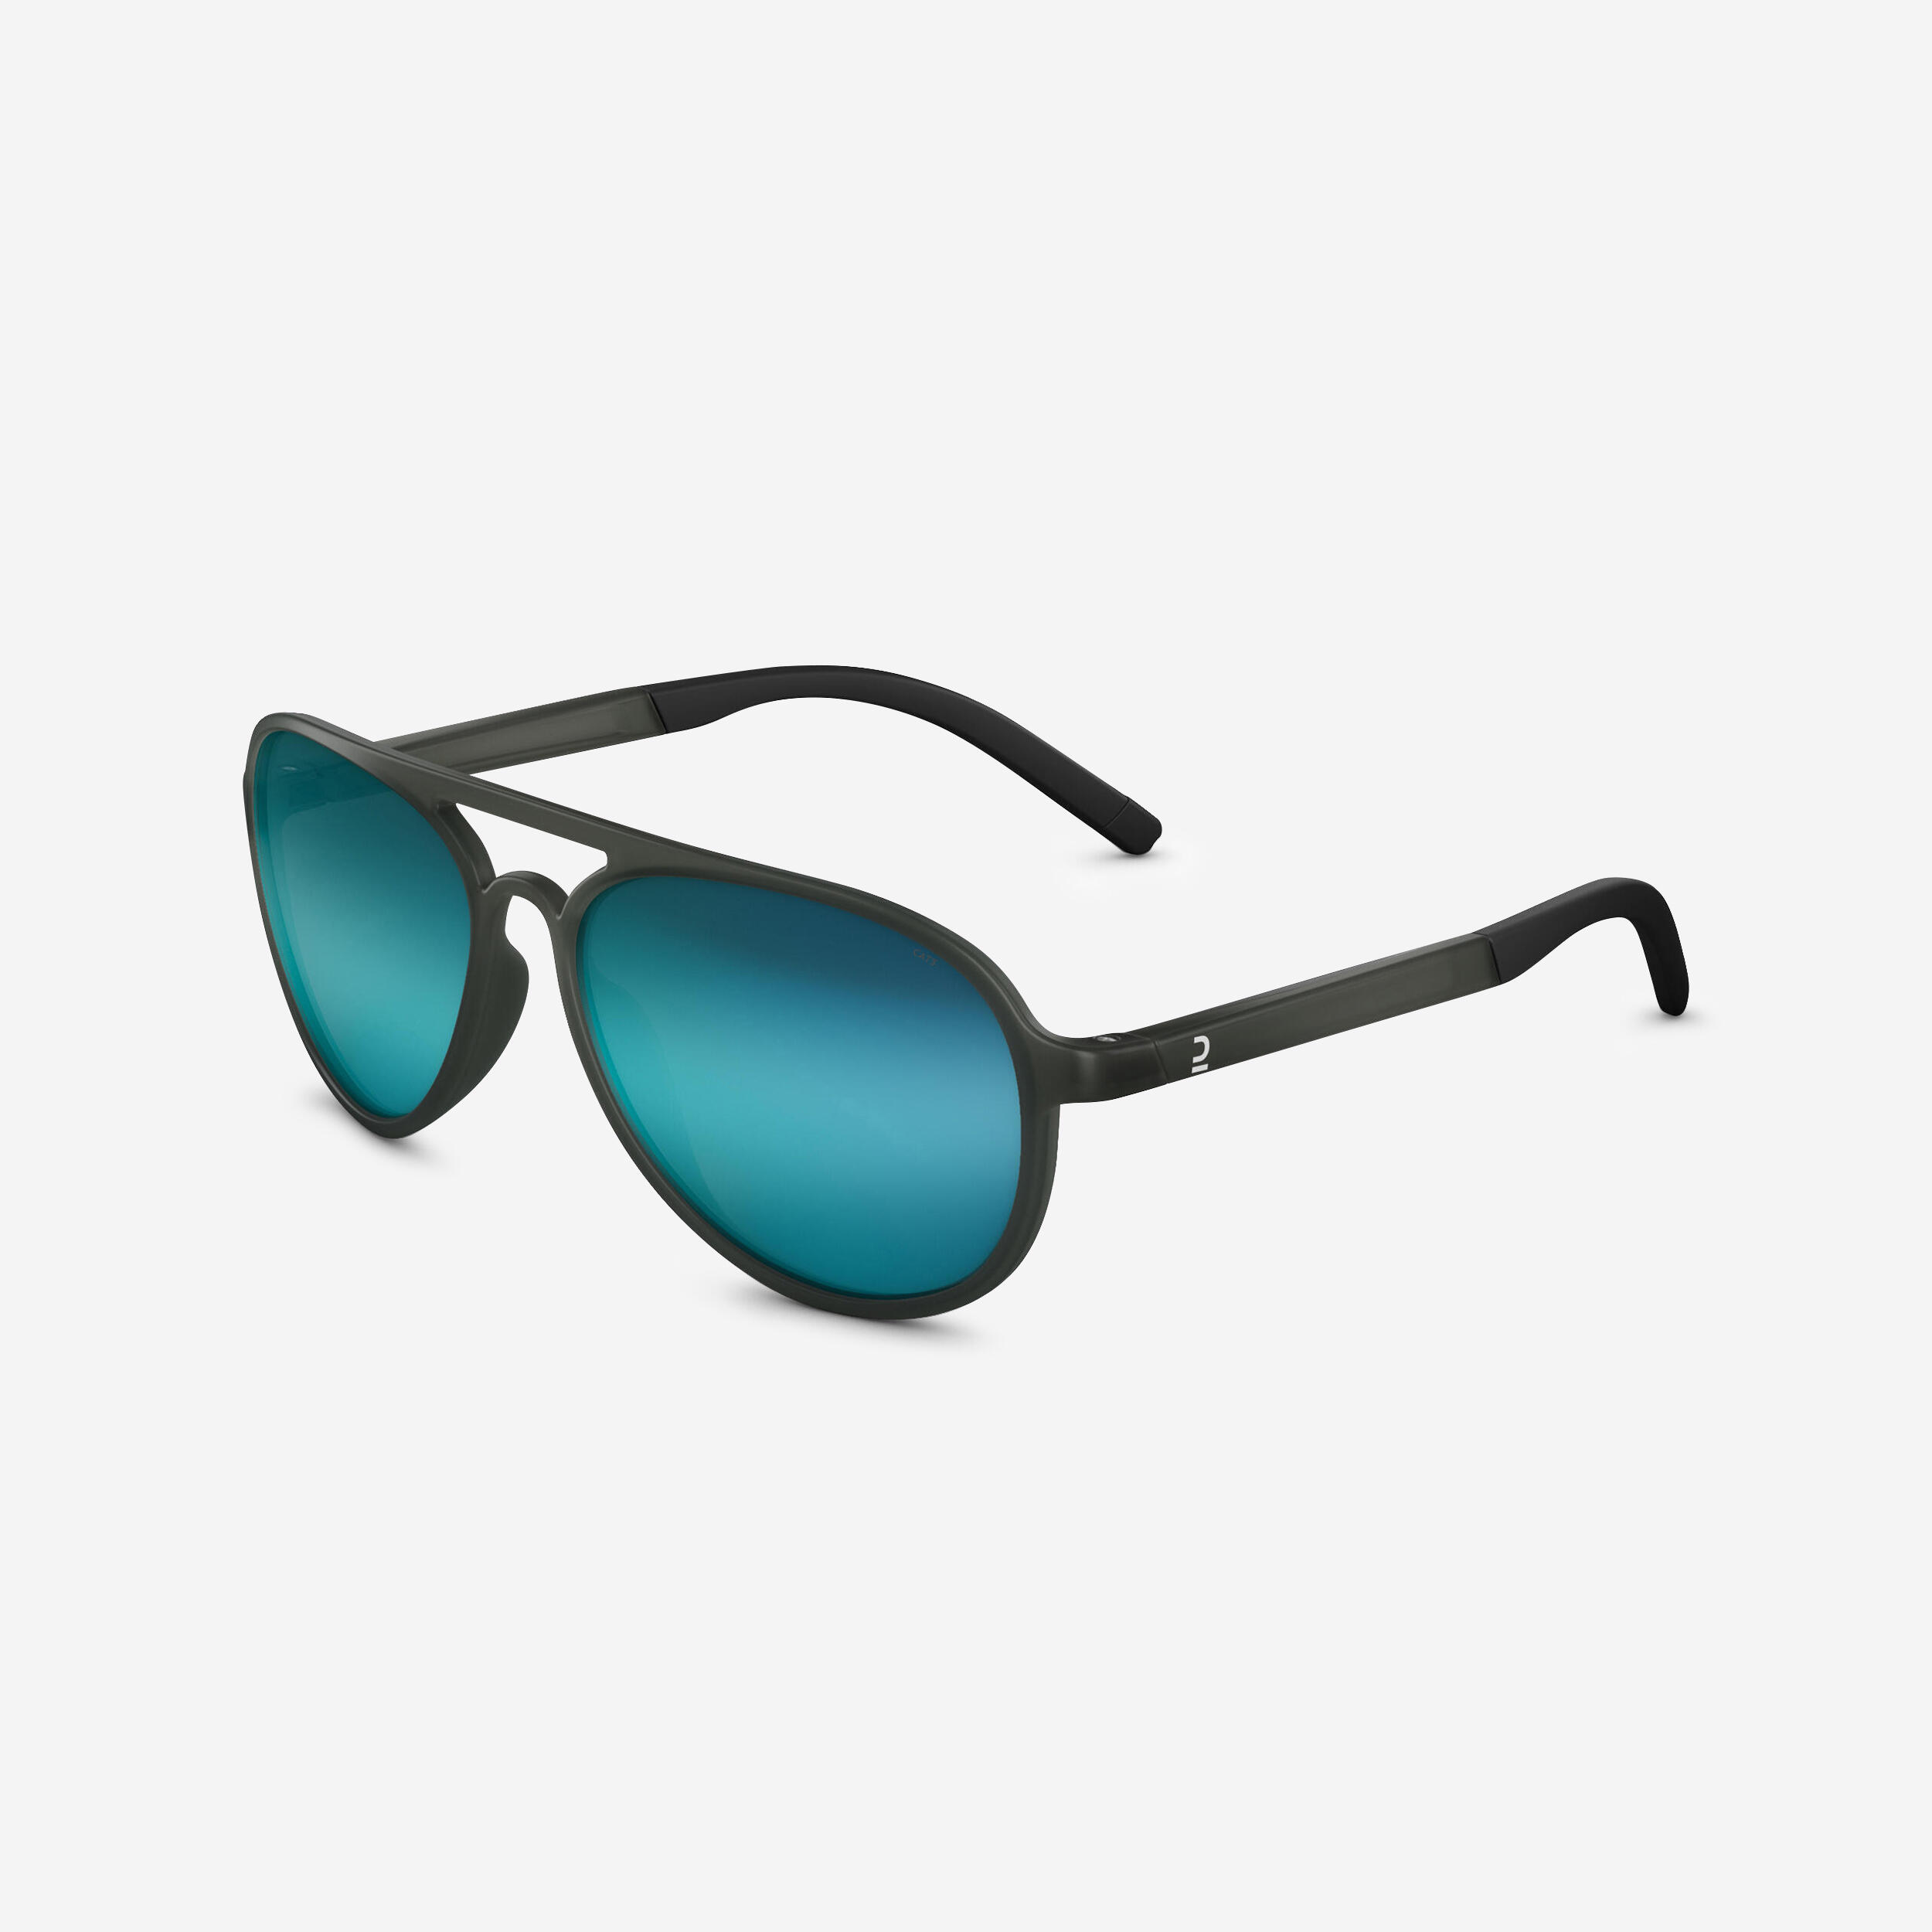 QUECHUA Hiking Sunglasses - MH120A - adult - category 3 blue